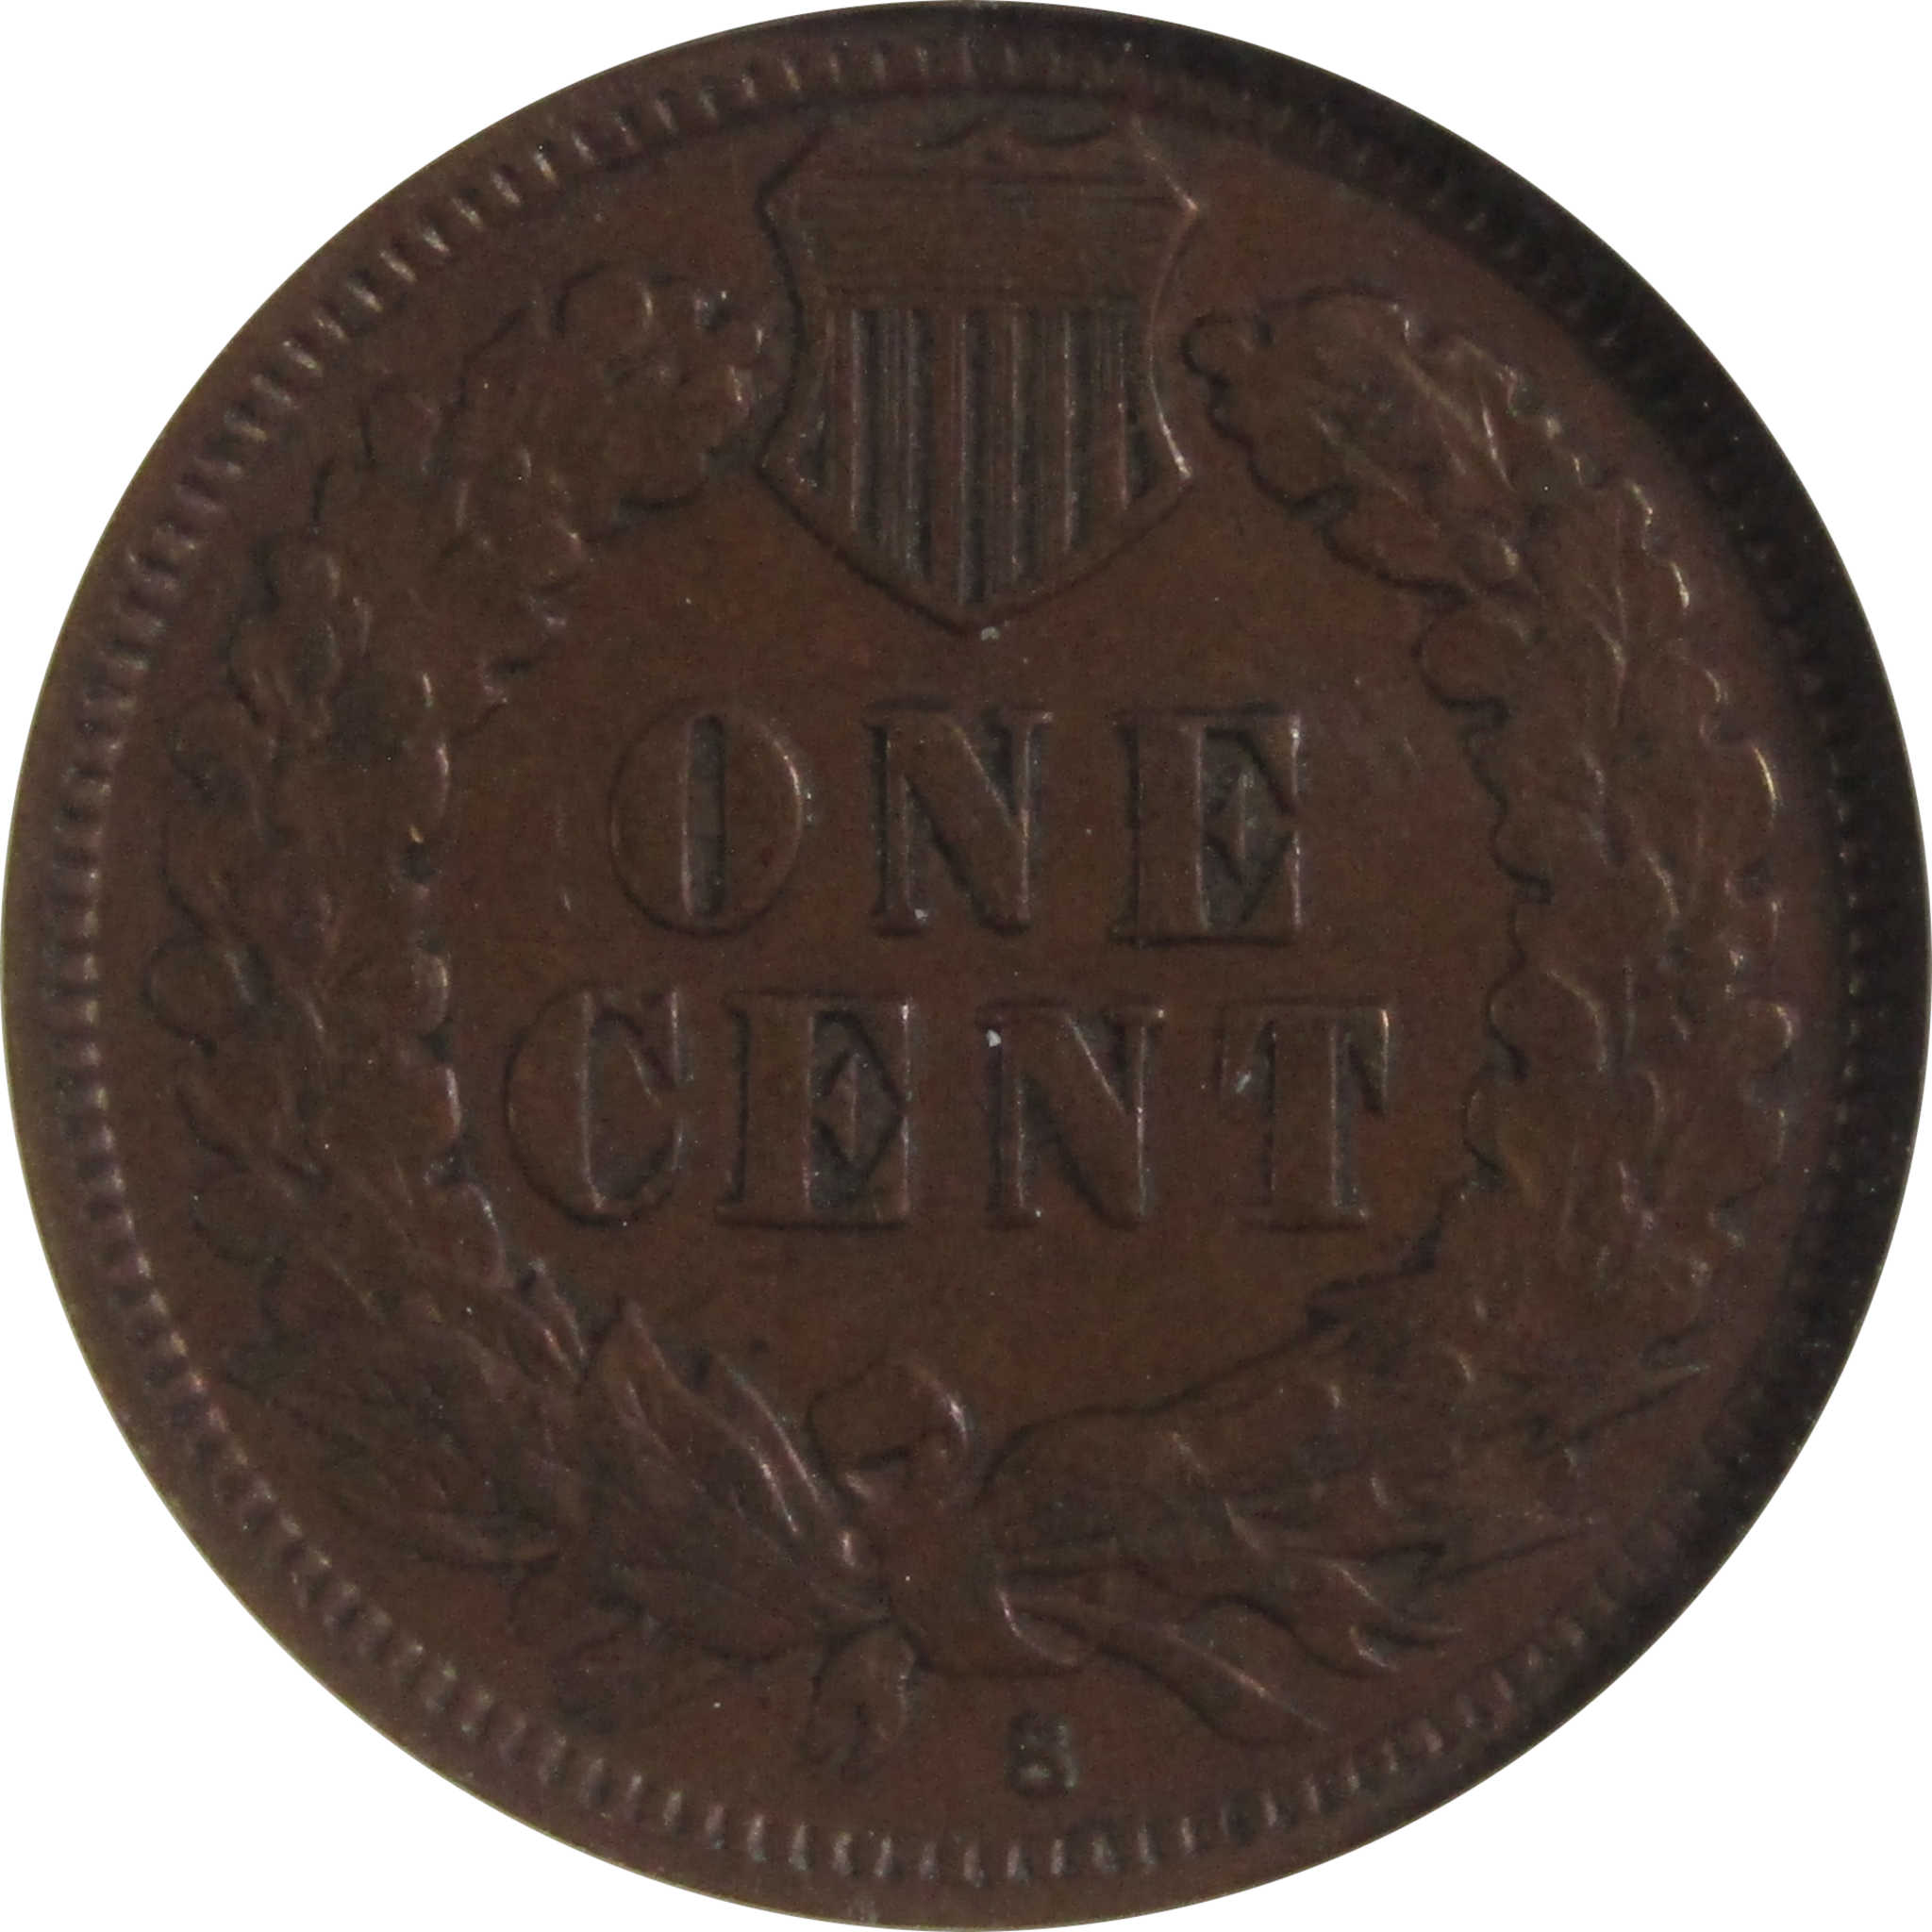 1908 S Indian Head Cent VF 30 ANACS Penny 1c US Coin SKU:IPC6929